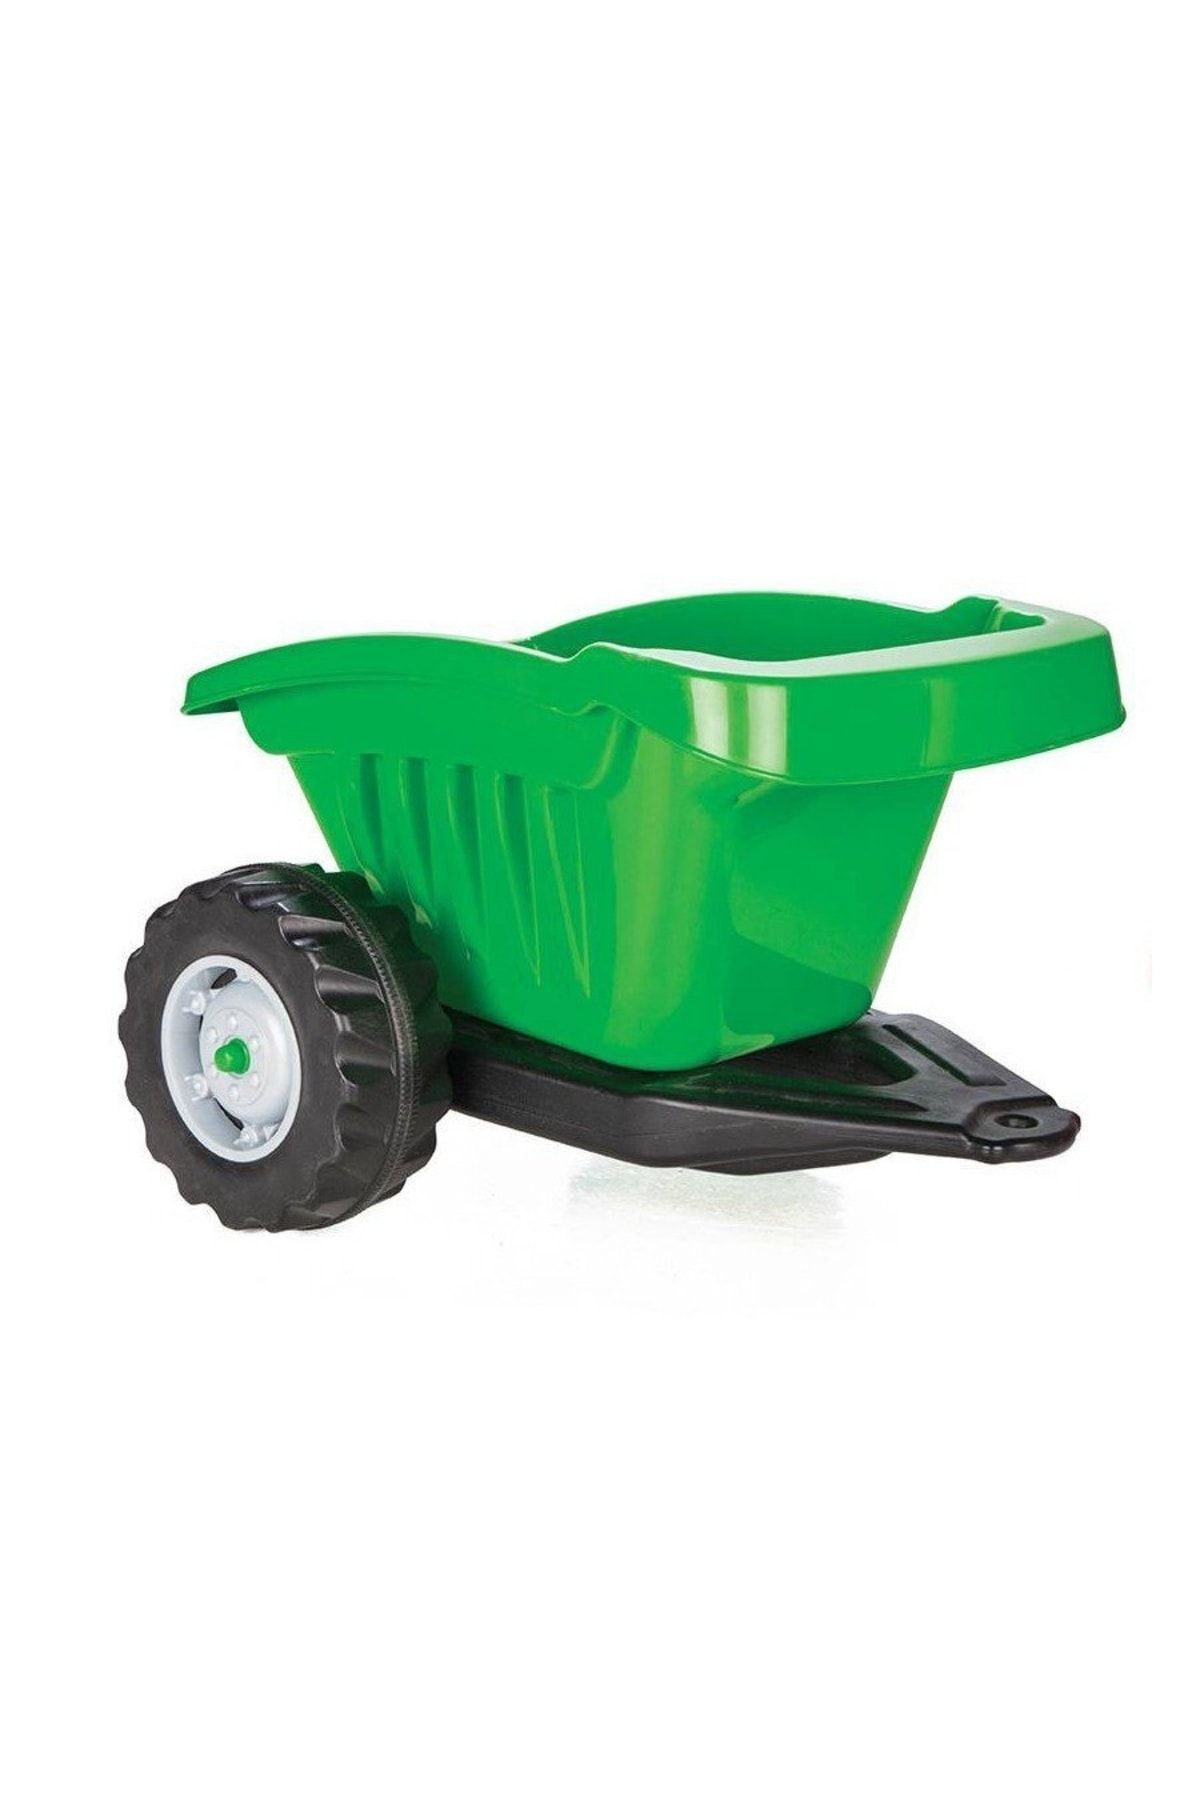 PİLSAN Active Tractor Römork-yeşil